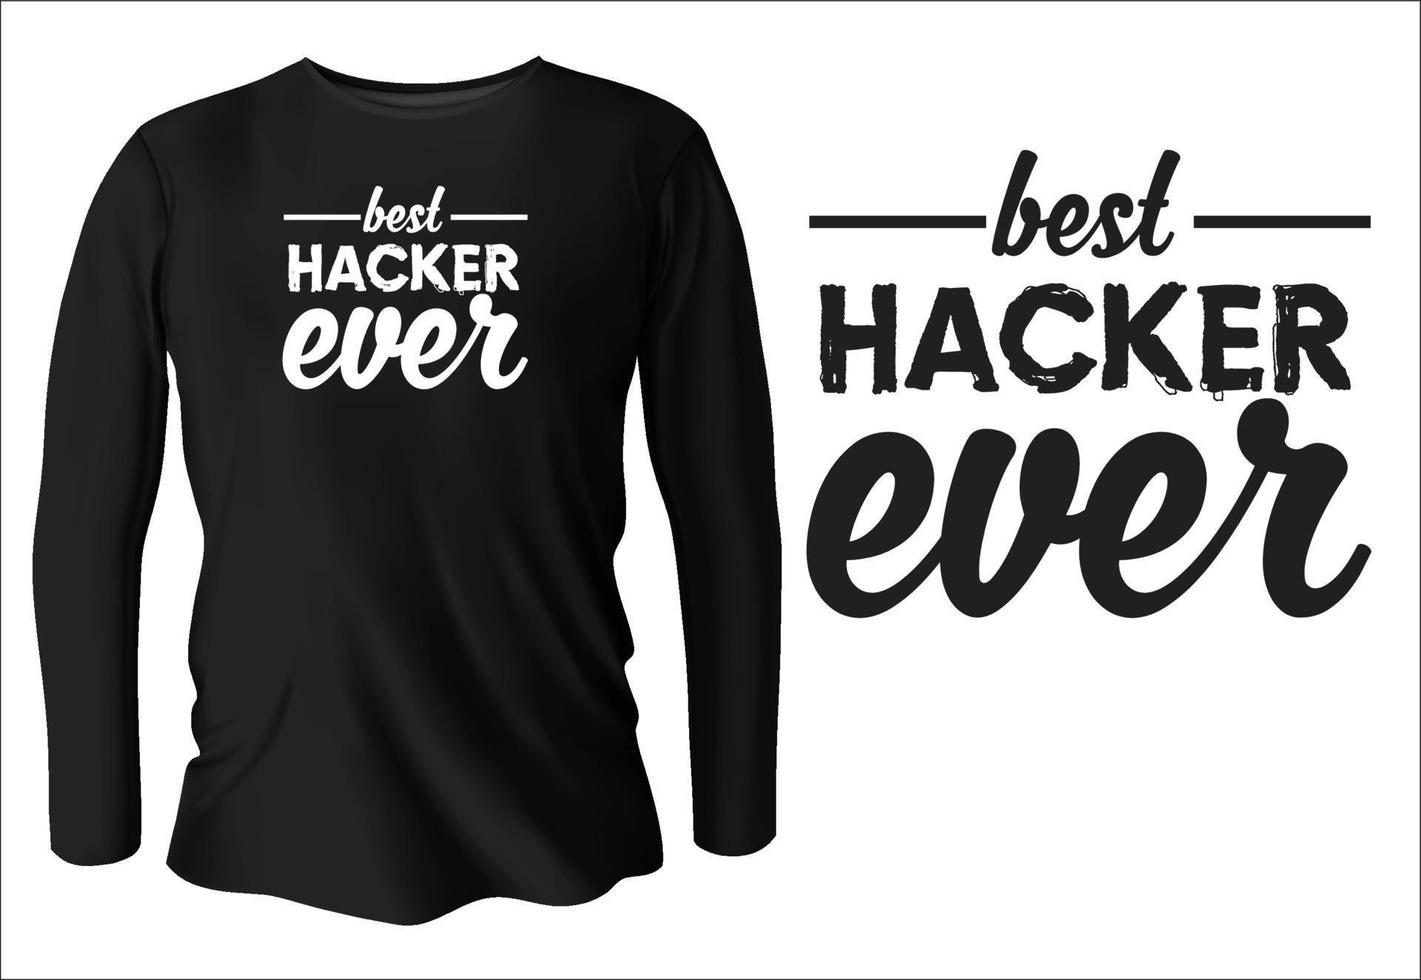 best hacker ever t-shirt design with vector